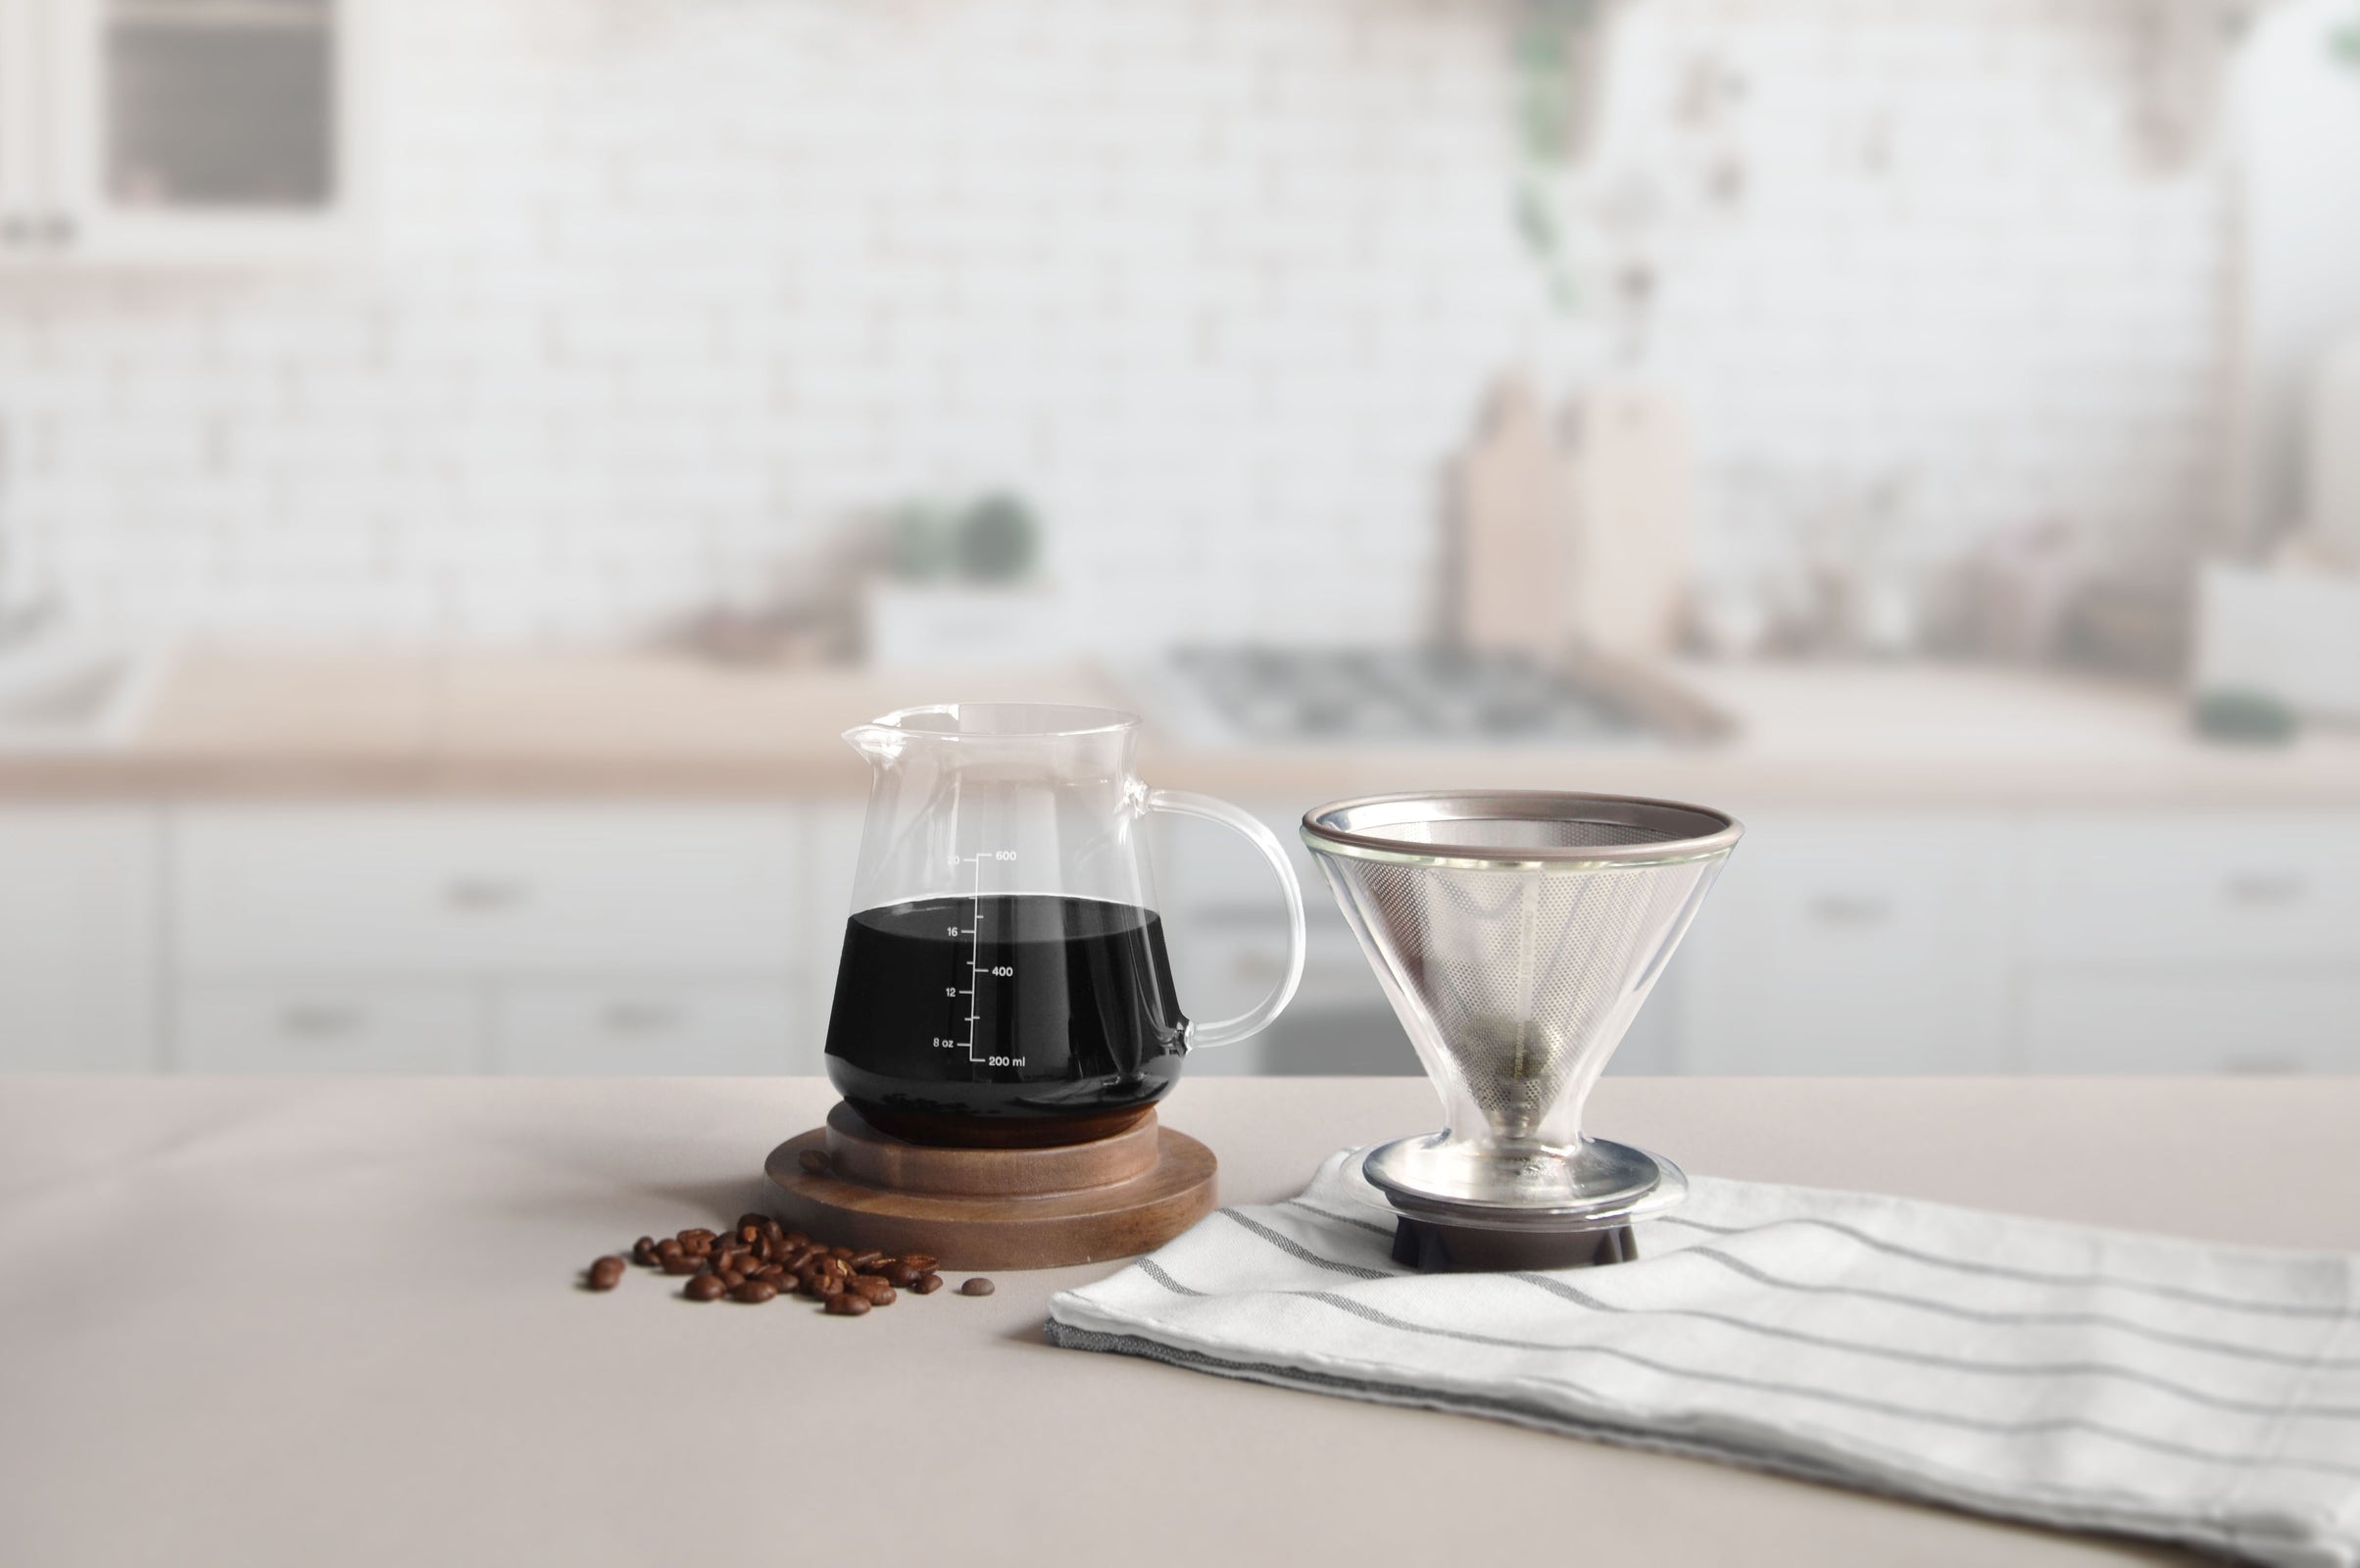 Ovalware RJ3 - Budget Friendly Coffee Gear 